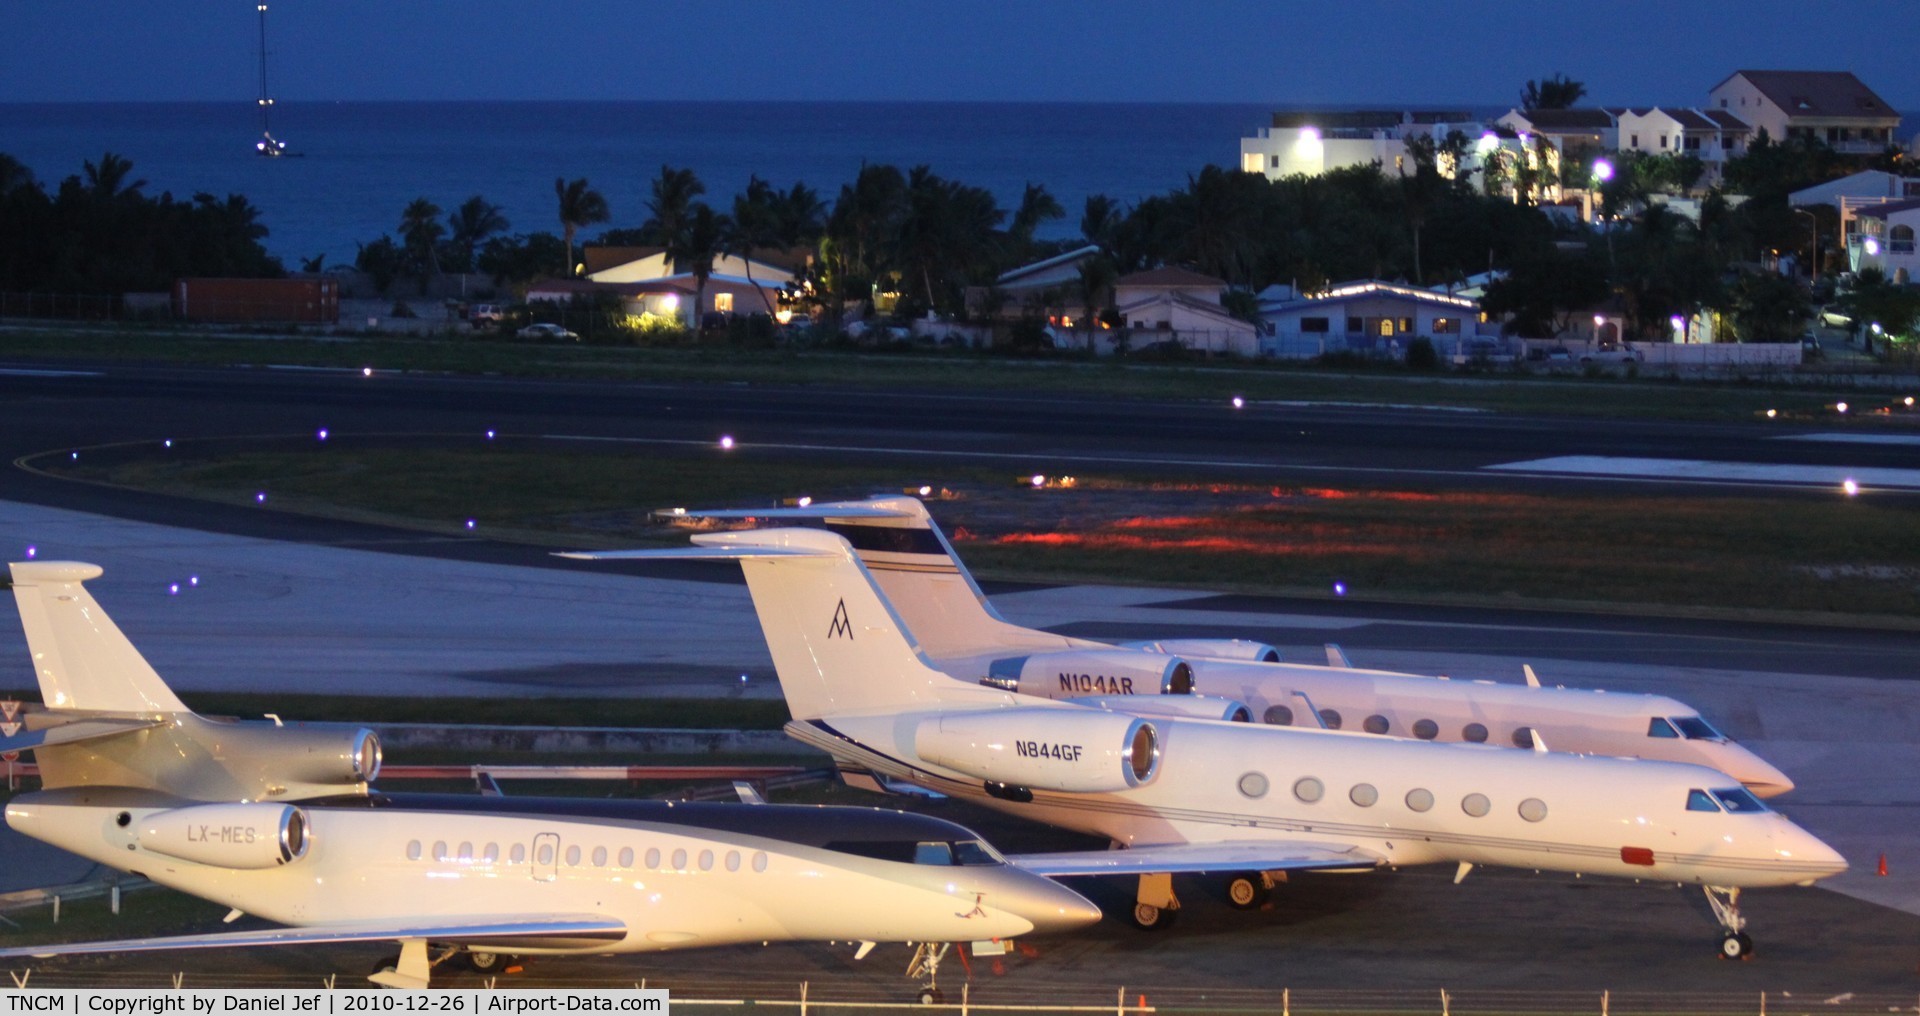 Princess Juliana International Airport, Philipsburg, Sint Maarten Netherlands Antilles (TNCM) - The cargo ramp at night TNCM